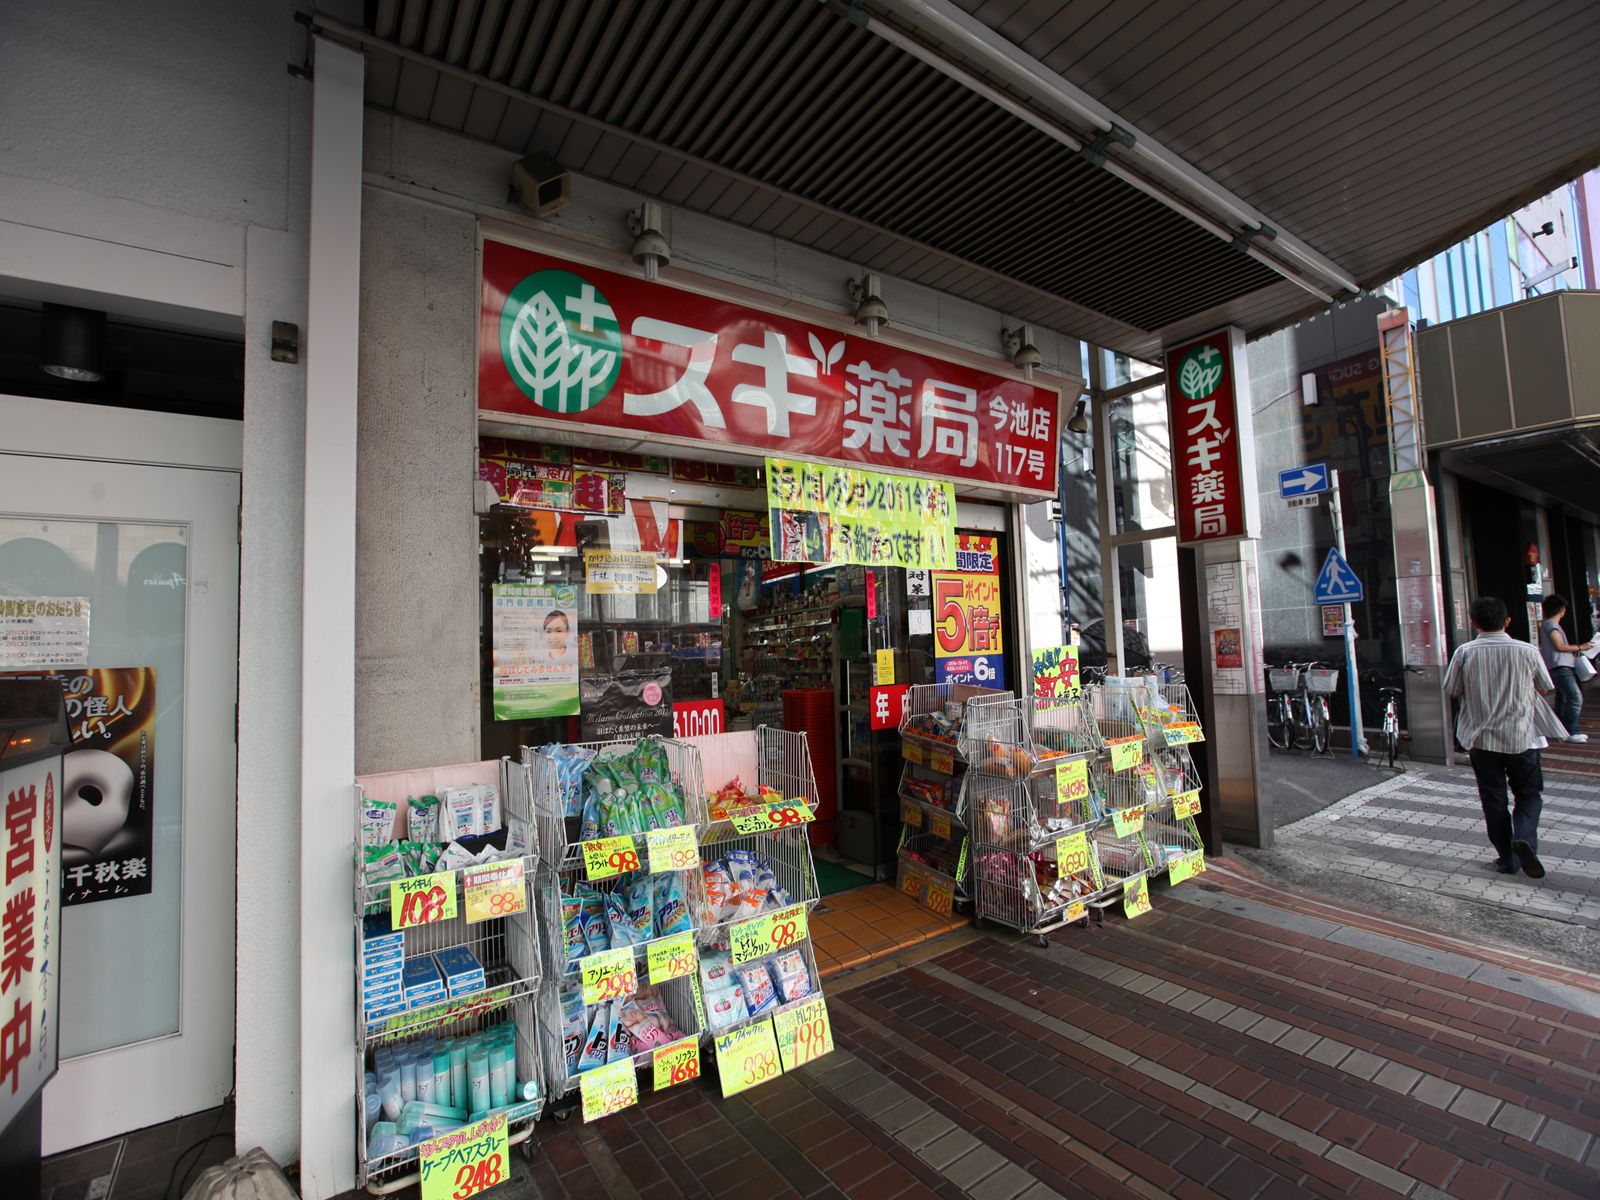 Dorakkusutoa. Cedar pharmacy Imaike shop 610m until (drugstore)